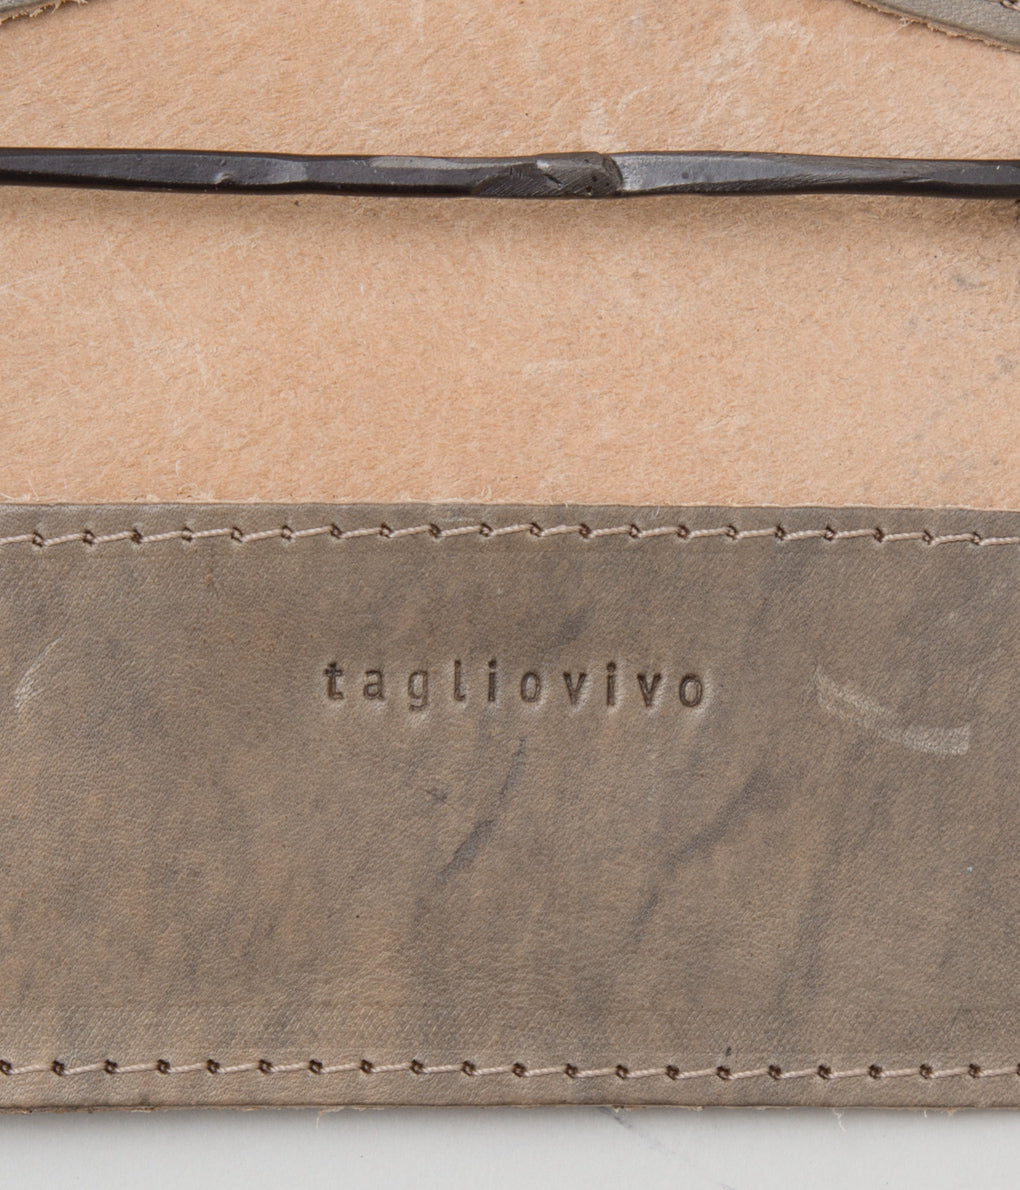 TAGLIOVIVO "CARD CASE" (HAND-DYED CULLATTA GRAY BEIGE)